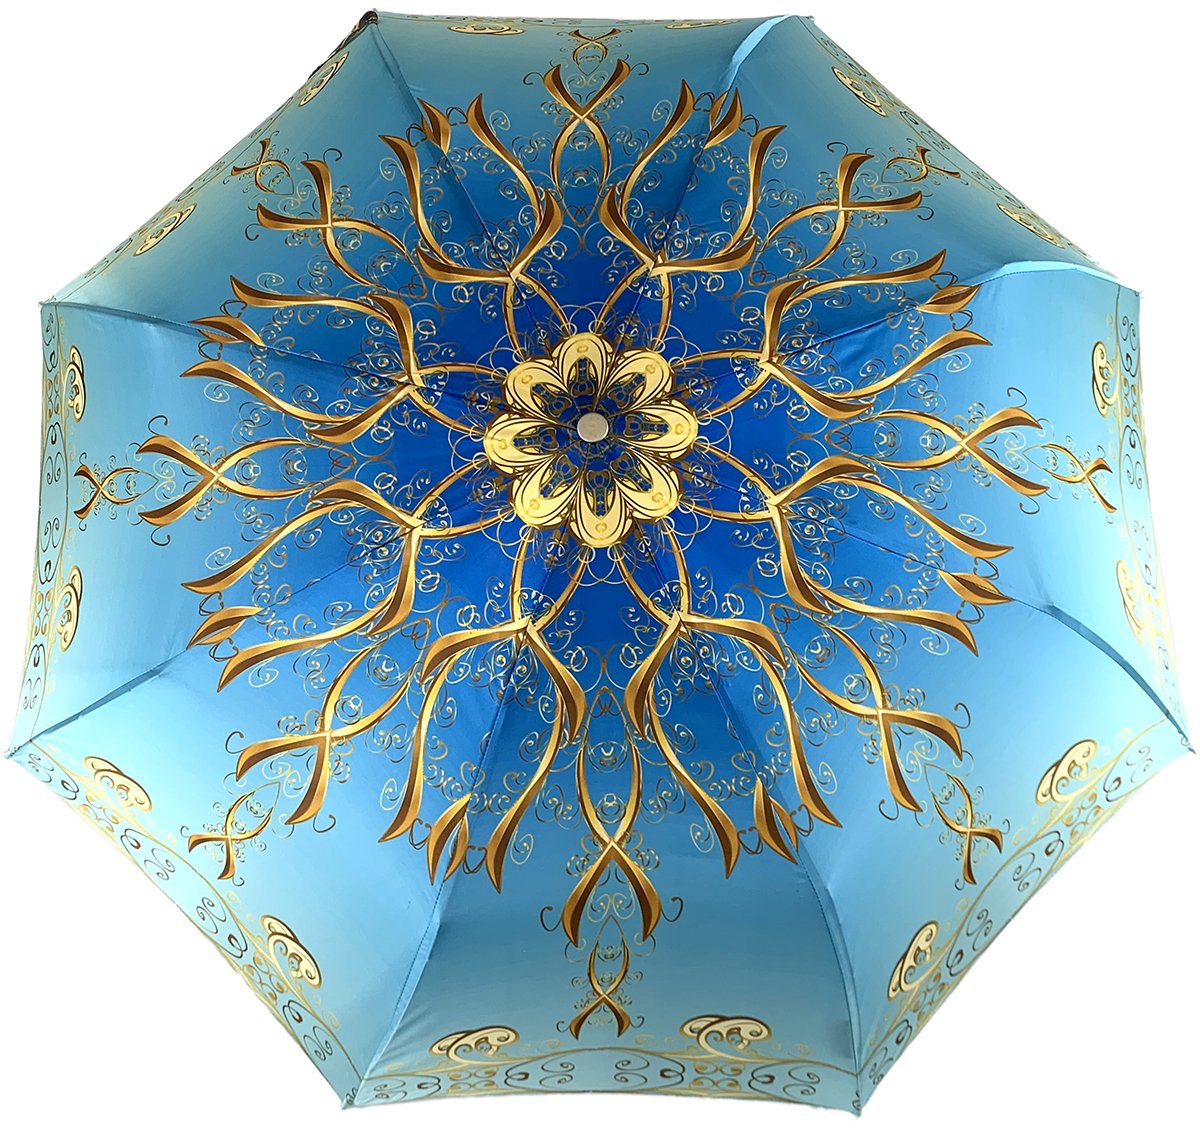 Women's Folding Umbrella - Exclusive Design - IL MARCHESATO LUXURY UMBRELLAS, CANES AND SHOEHORNS